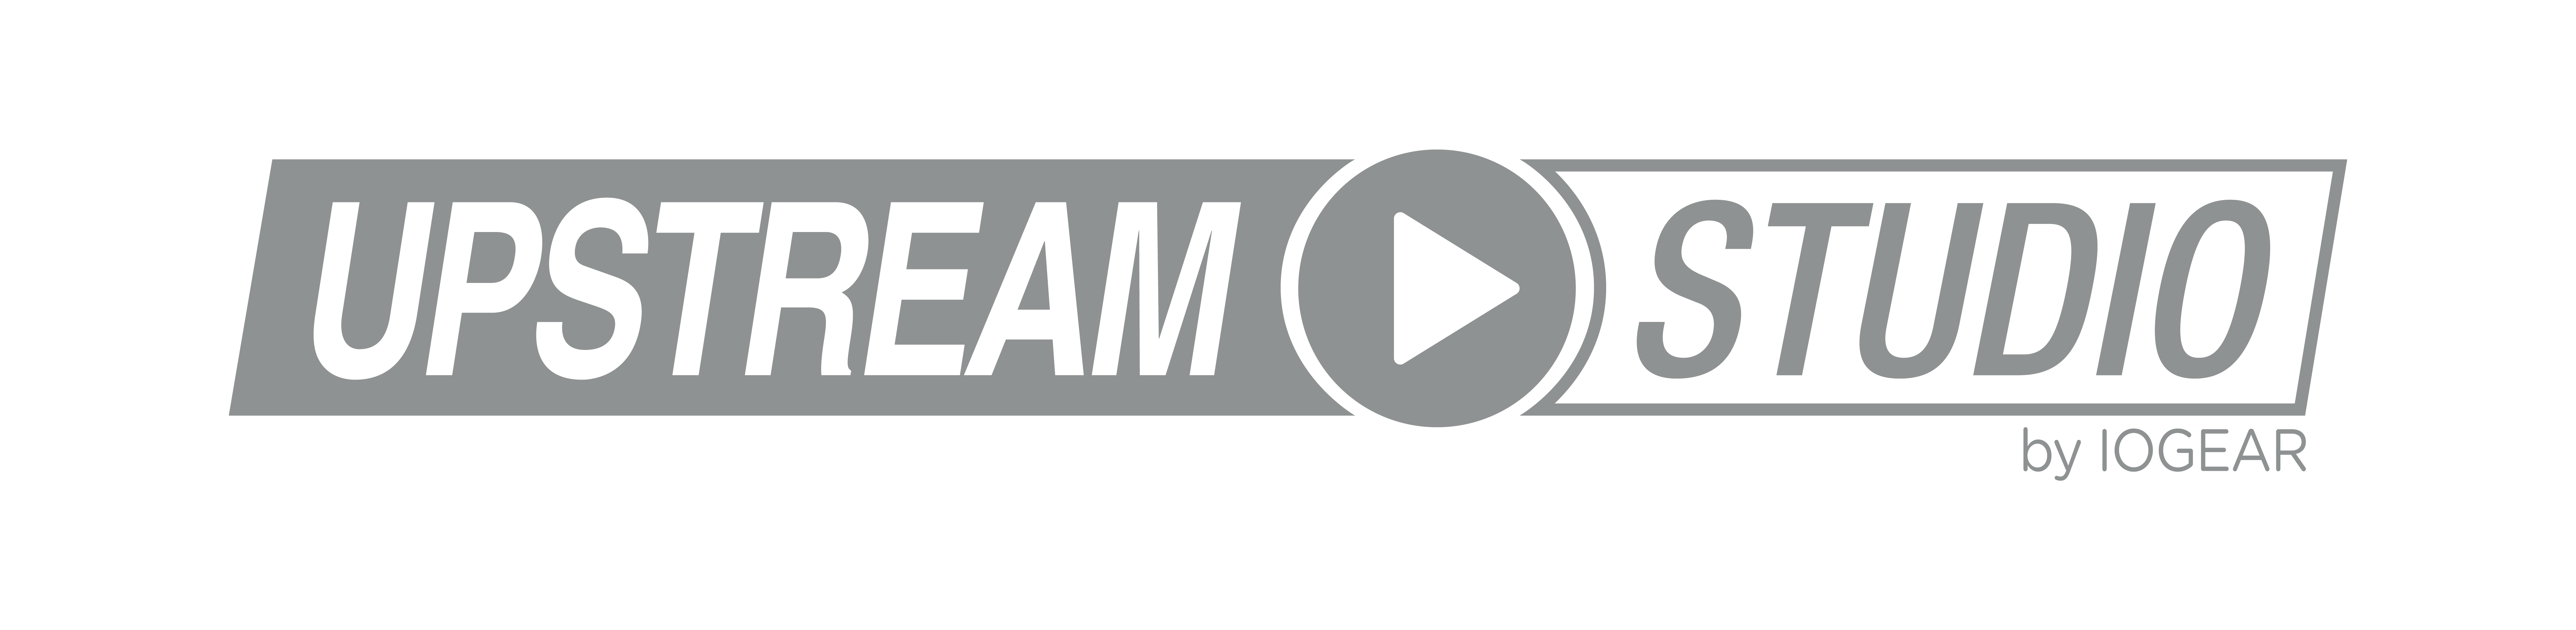 upstream pro logo